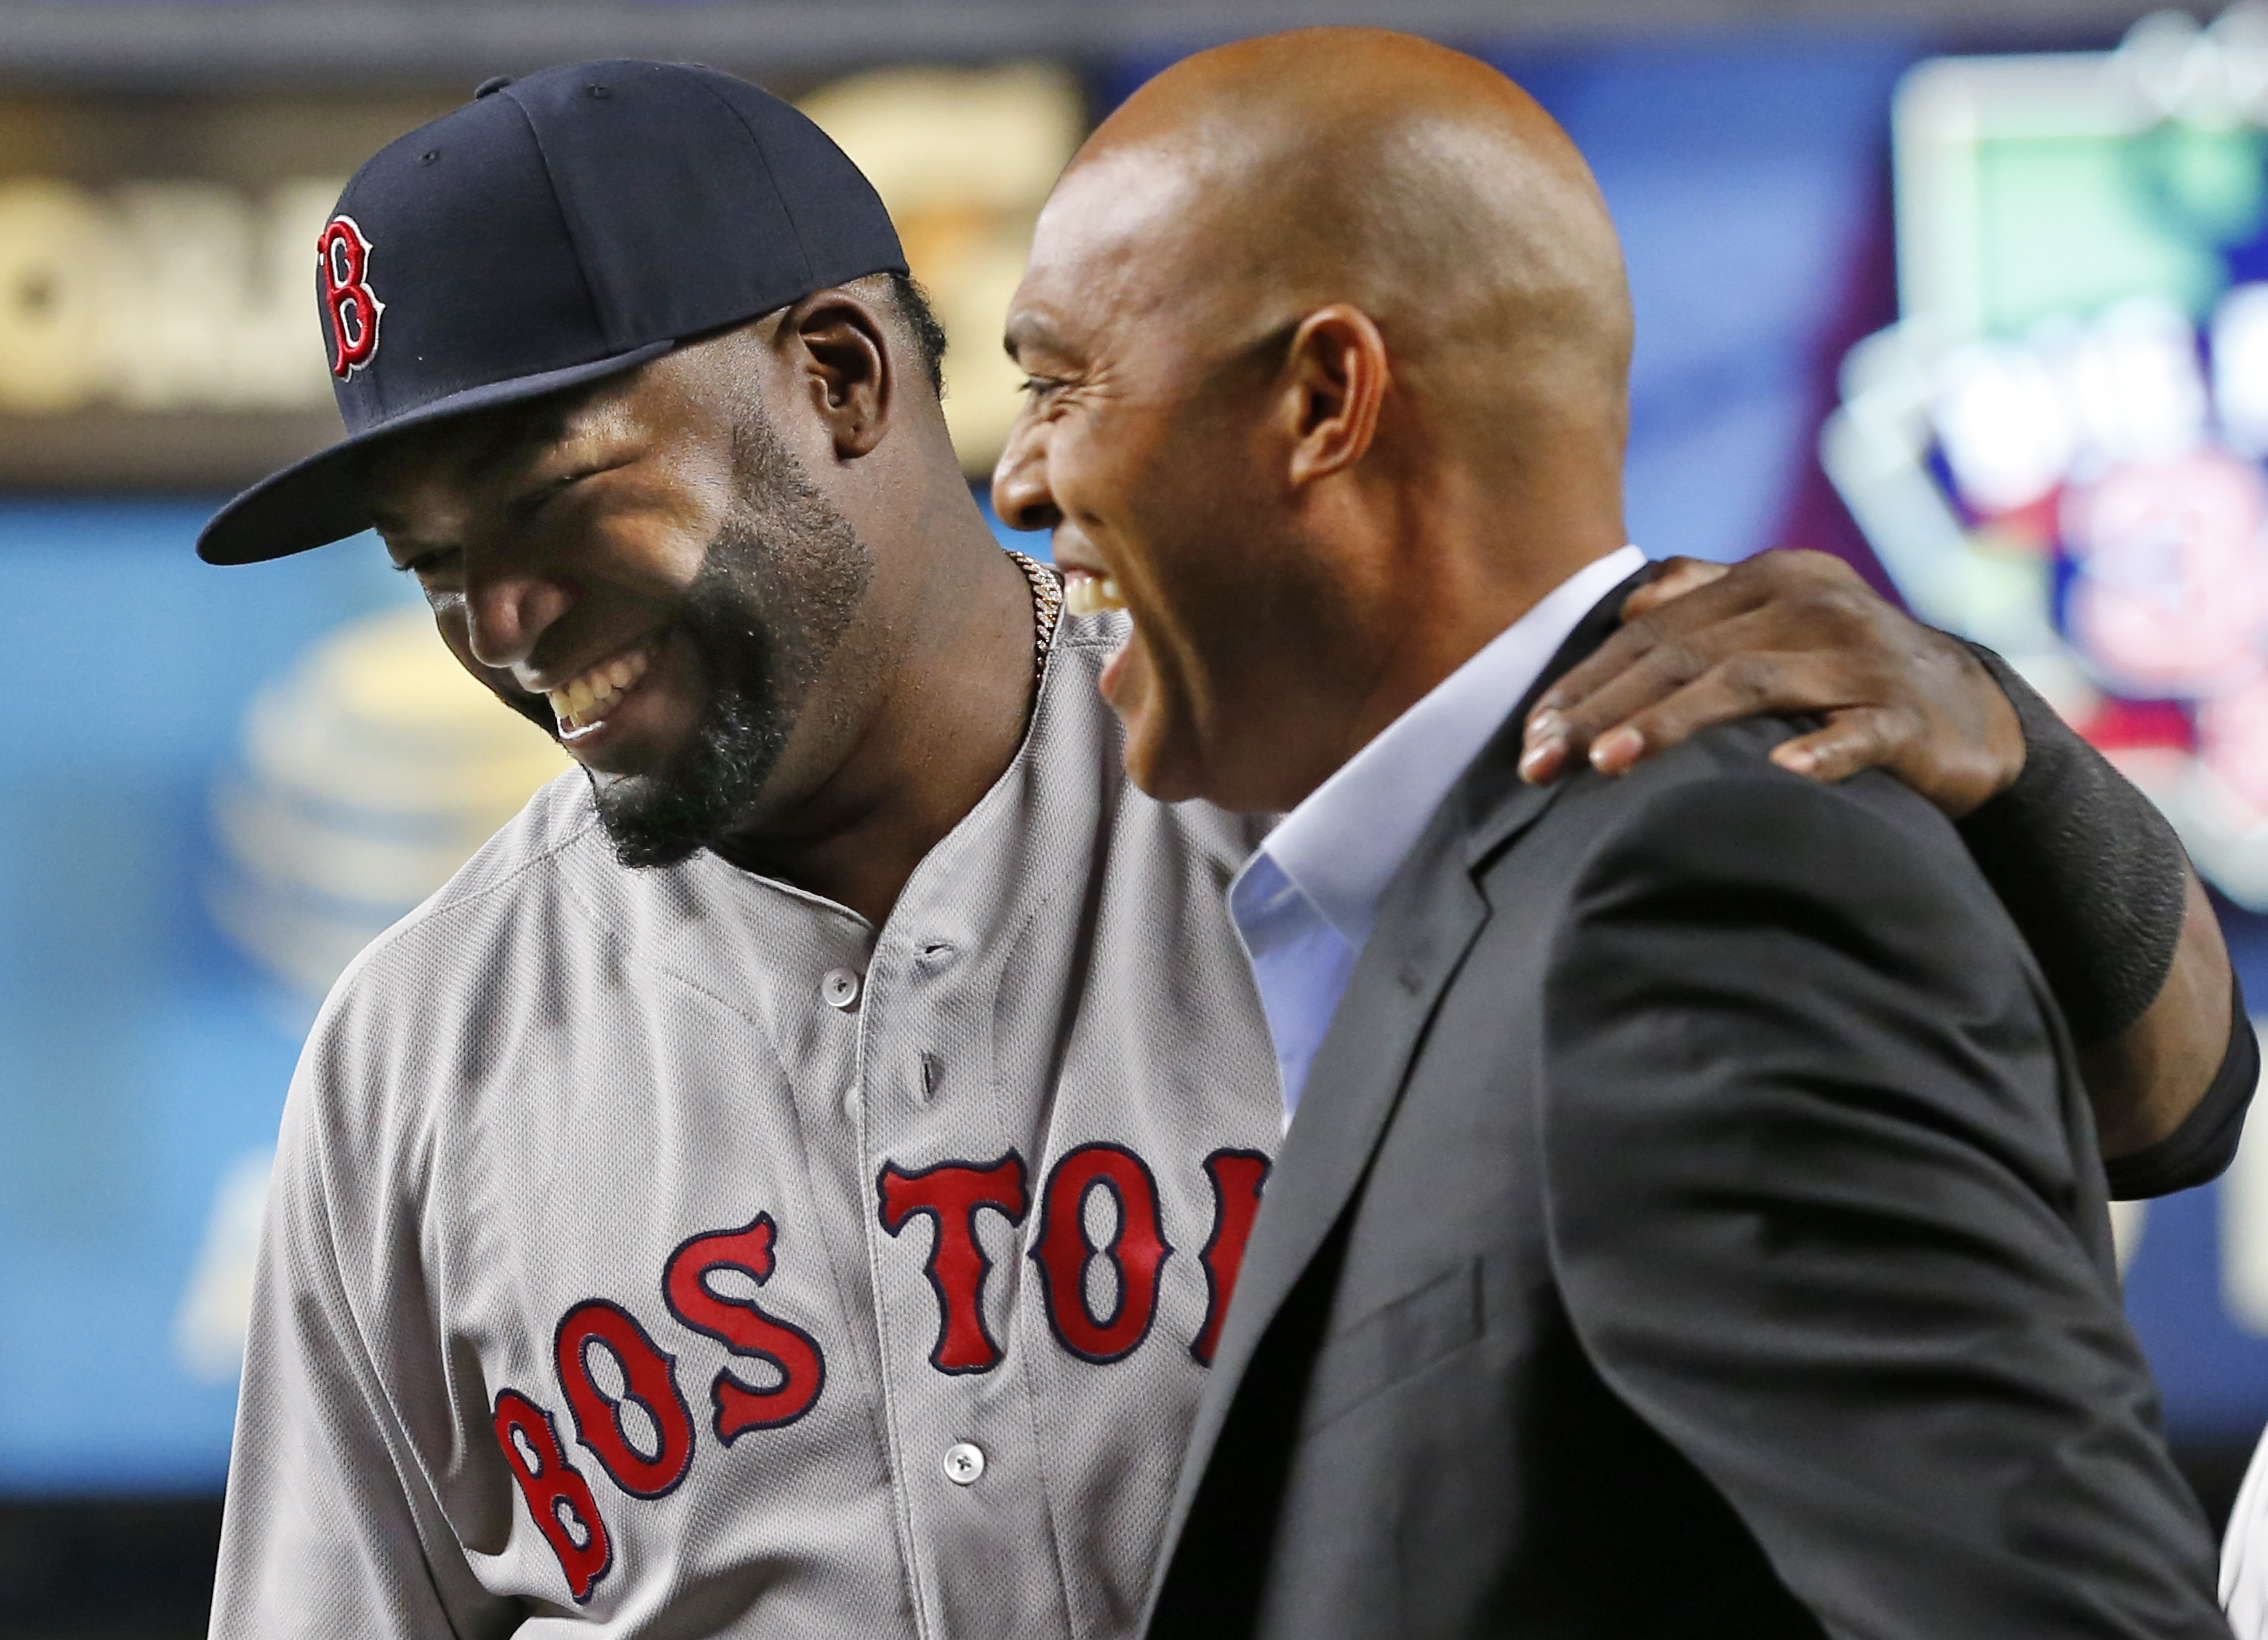 Farewell, David Ortiz: A Goodbye From New York Yankees Fans